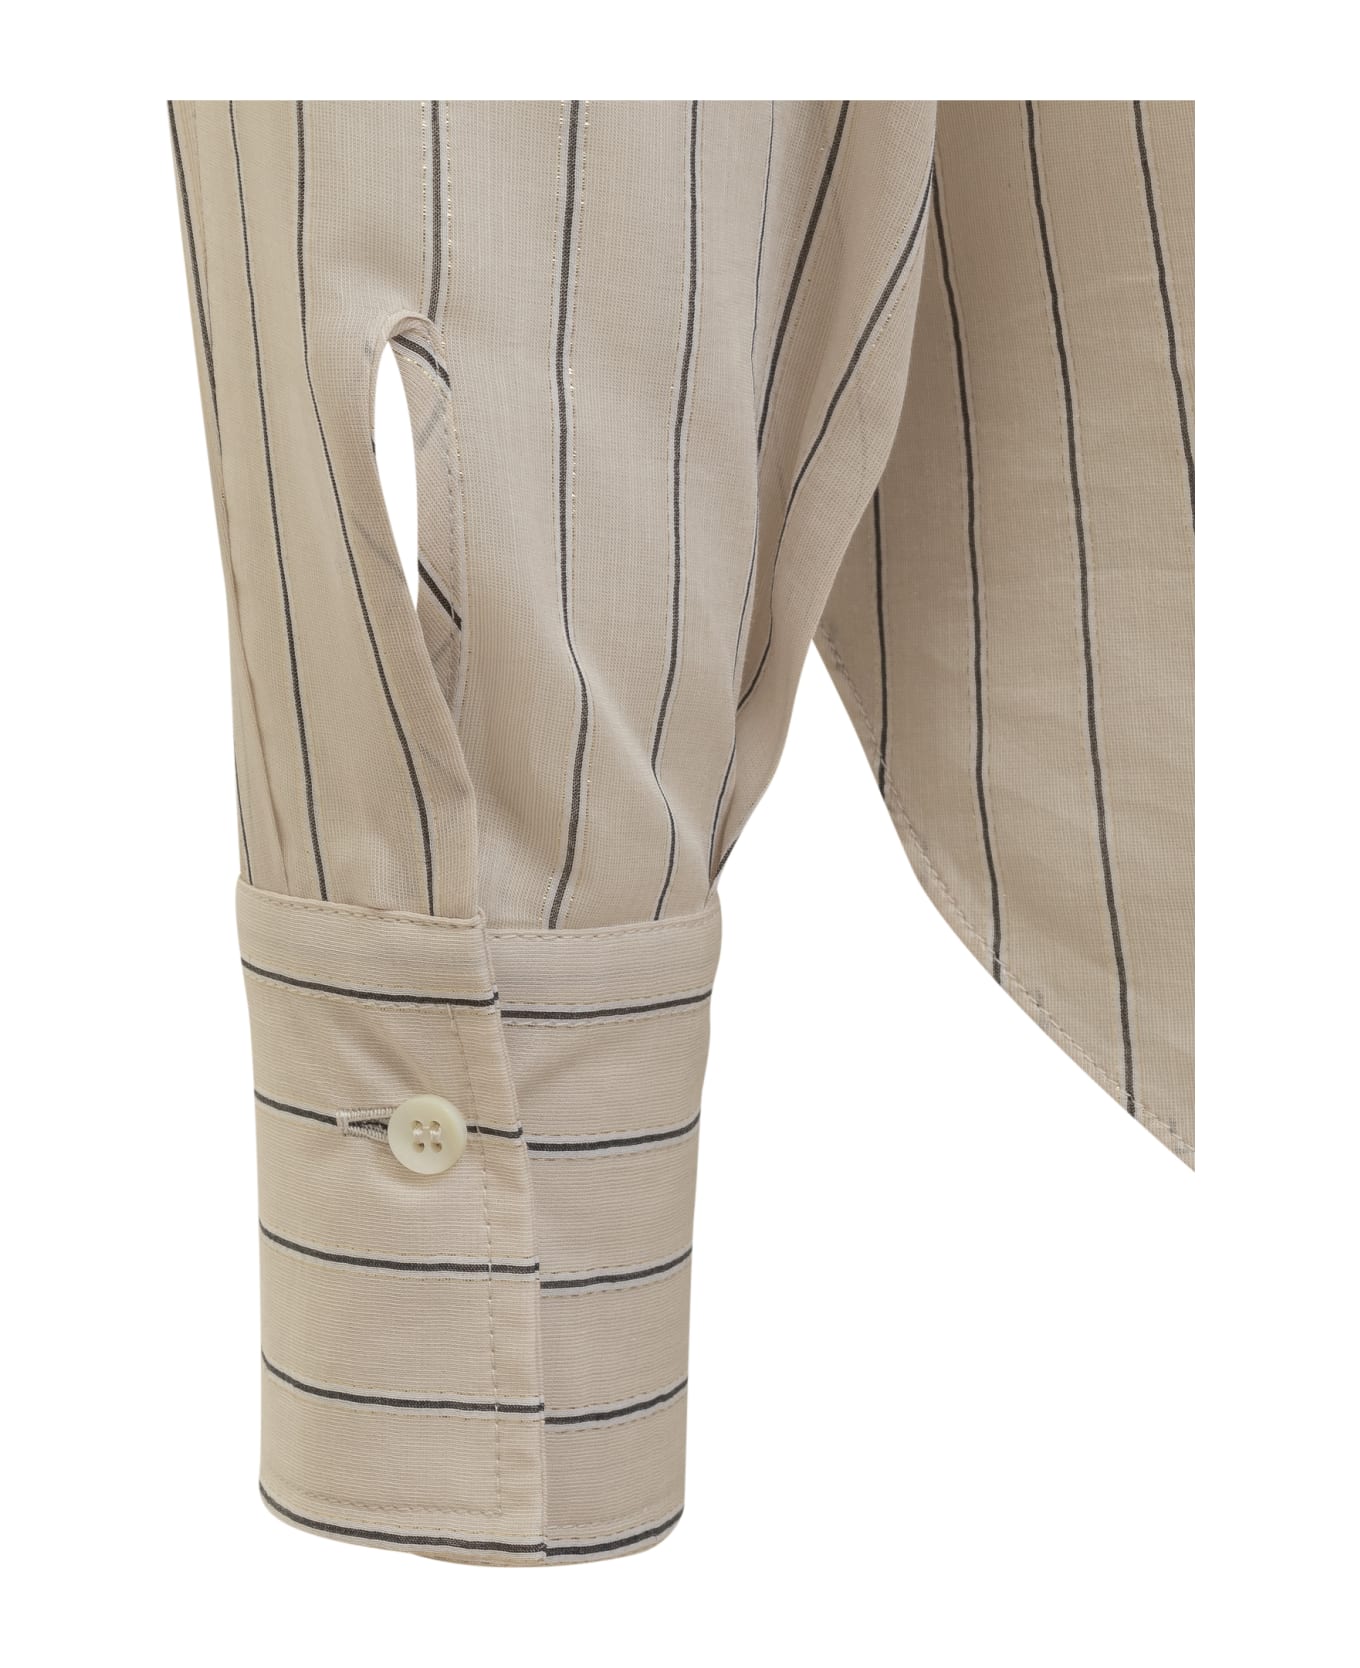 Brunello Cucinelli Cotton And Silk Sparkling Stripe Poplin Shirt With Monile - SALGEMMA/BIANCO/NERO シャツ